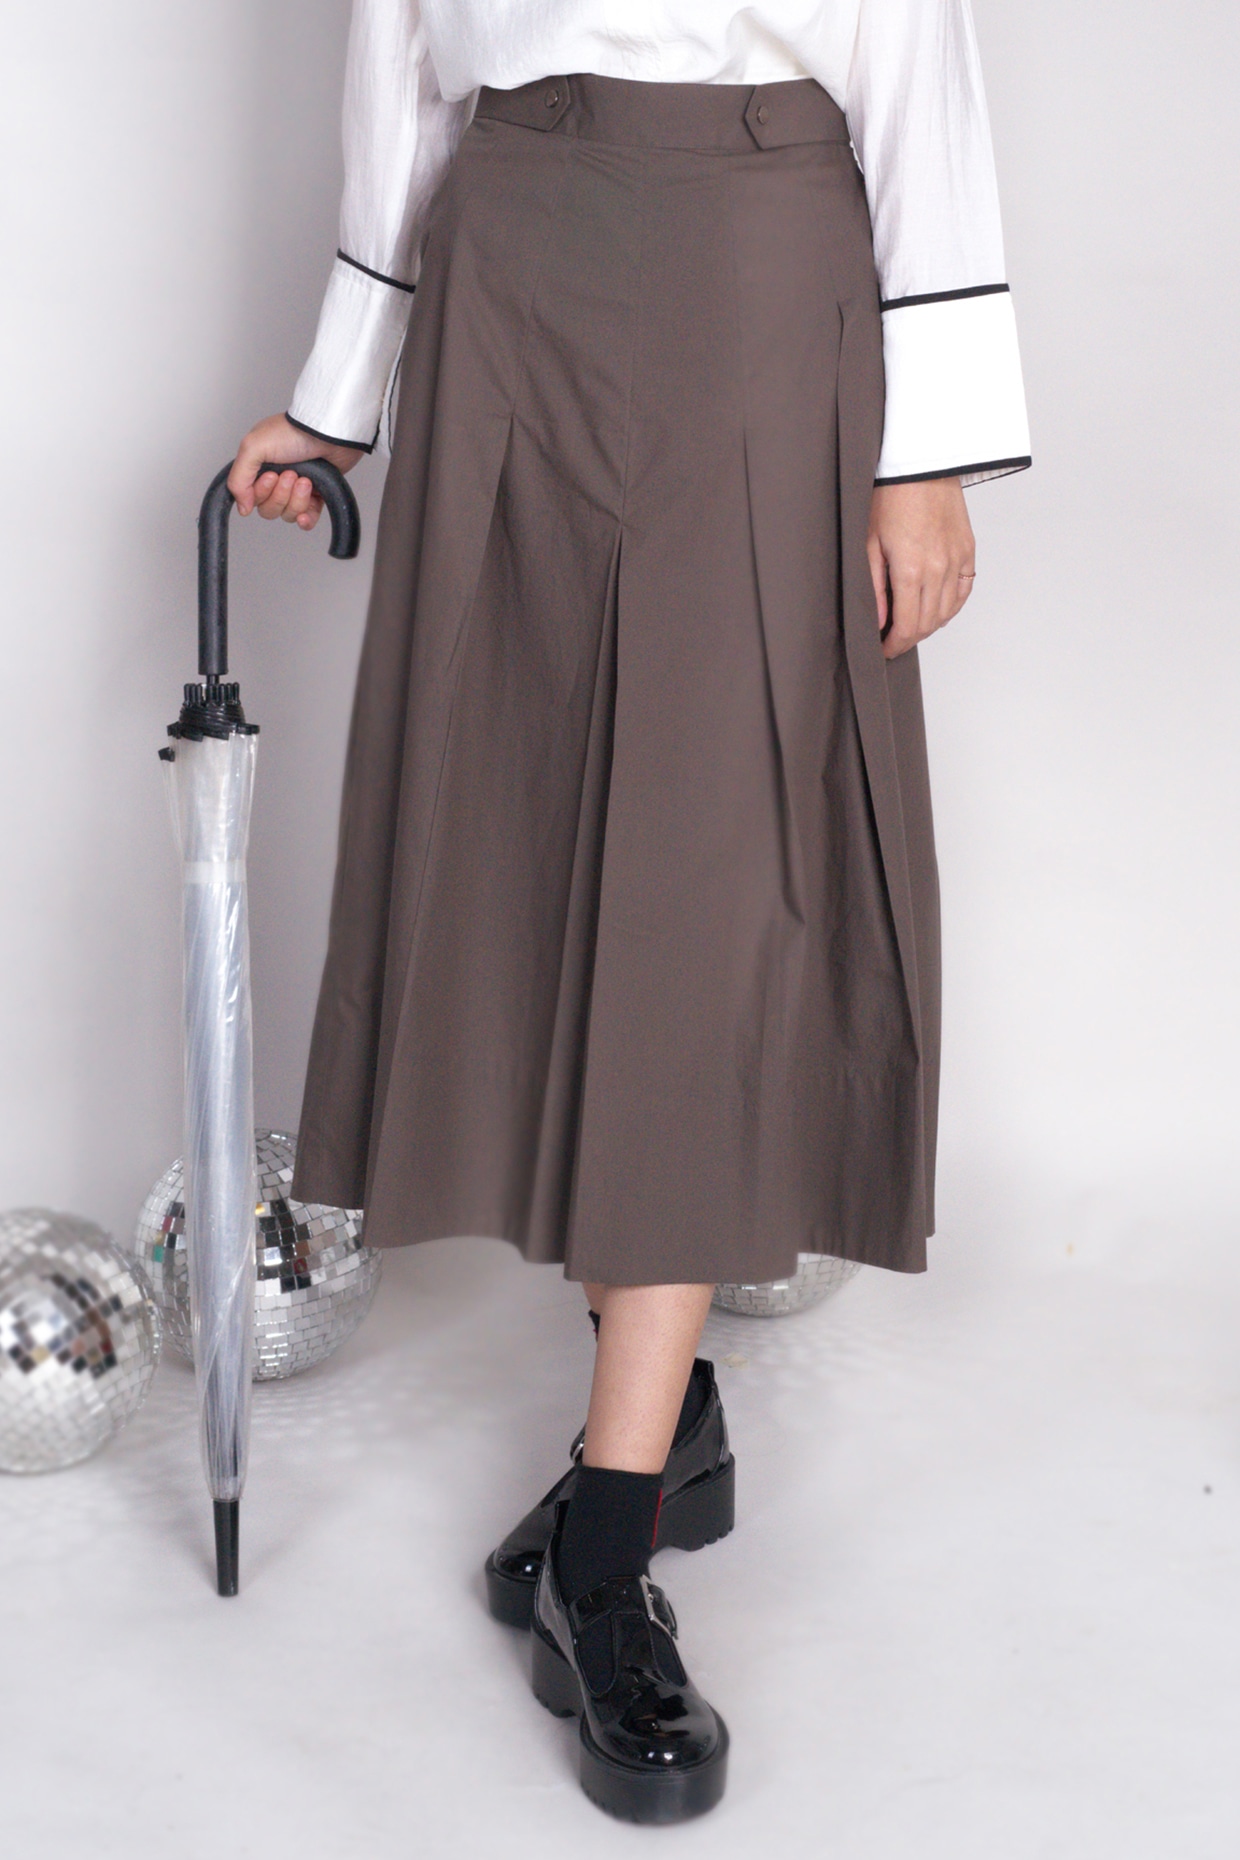 Pattern - Women's split skirt CULOTTES (sizes 32 - 52) - Picolly.com